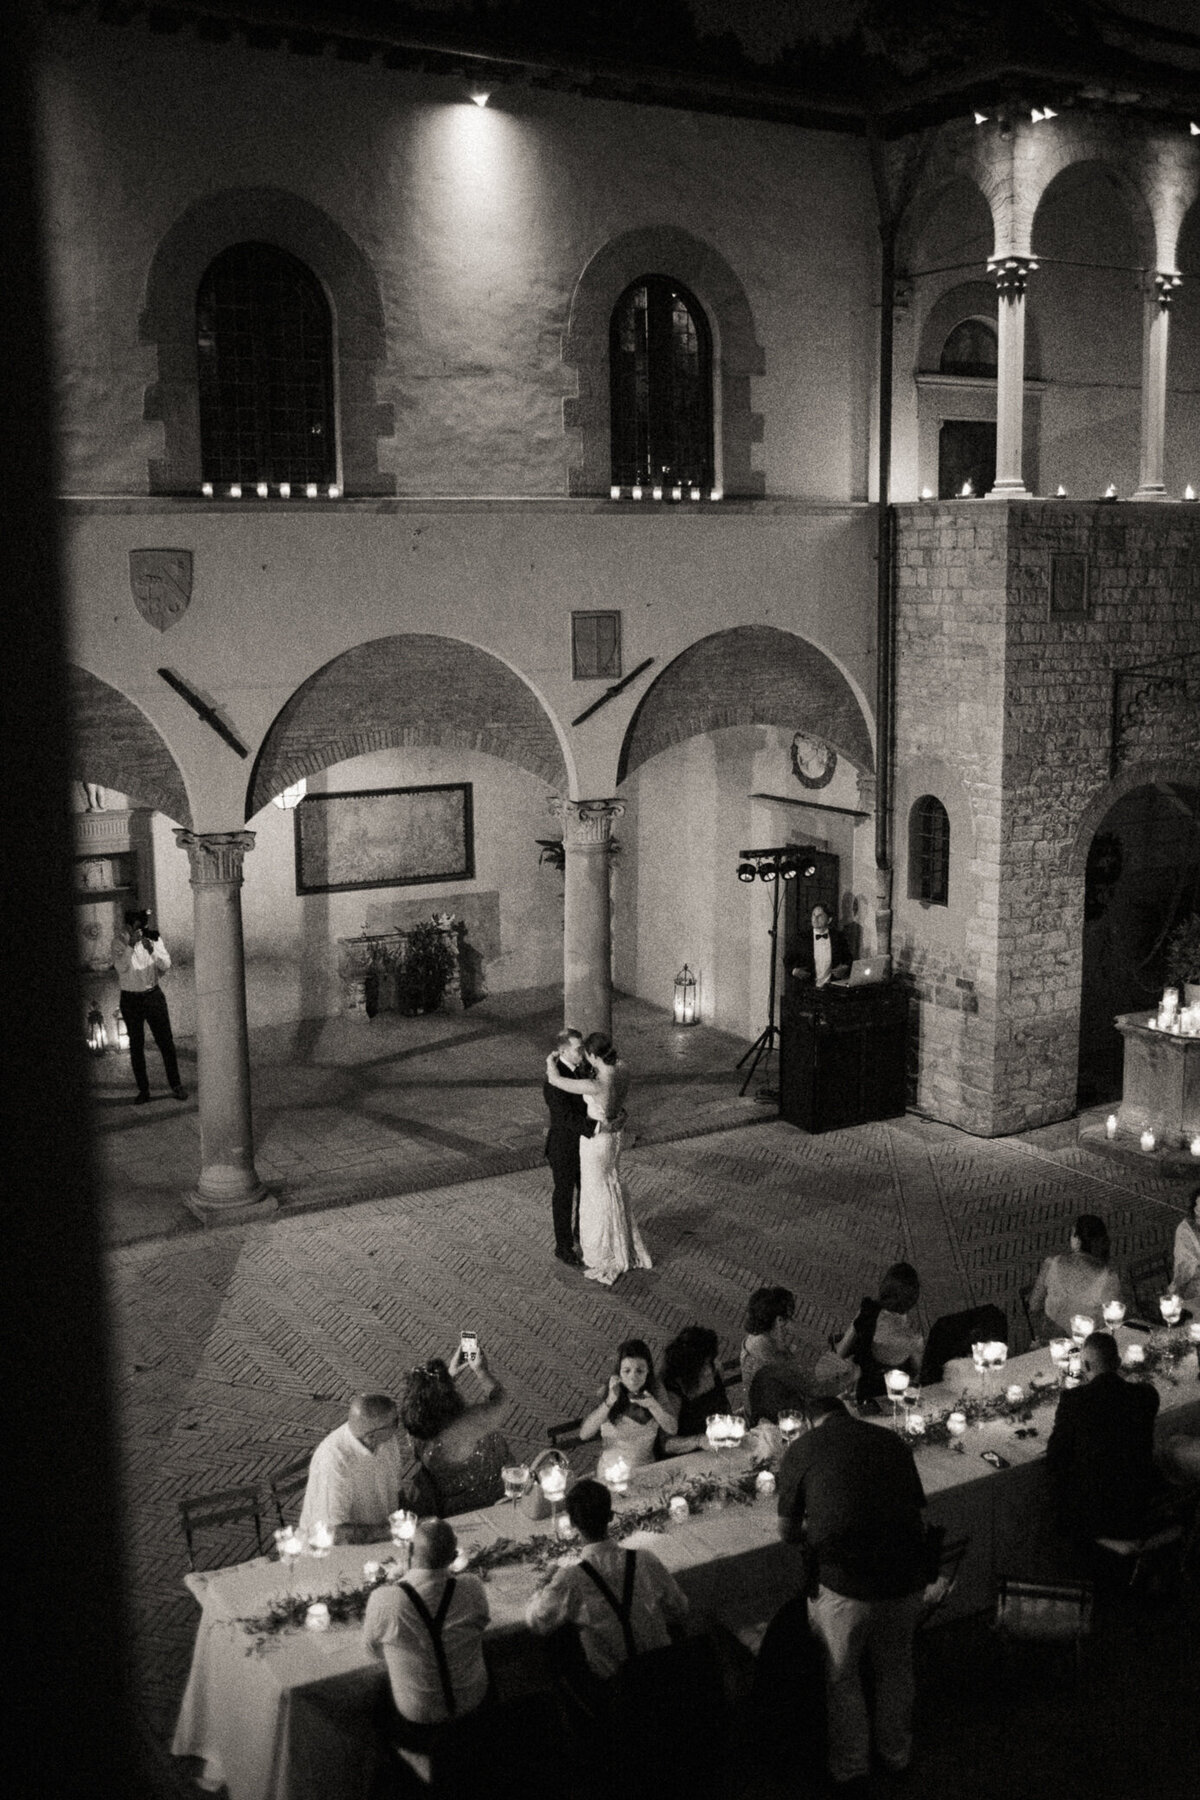 Castello Il Palagio Wedding in Tuscany Italy By Bridget Photography